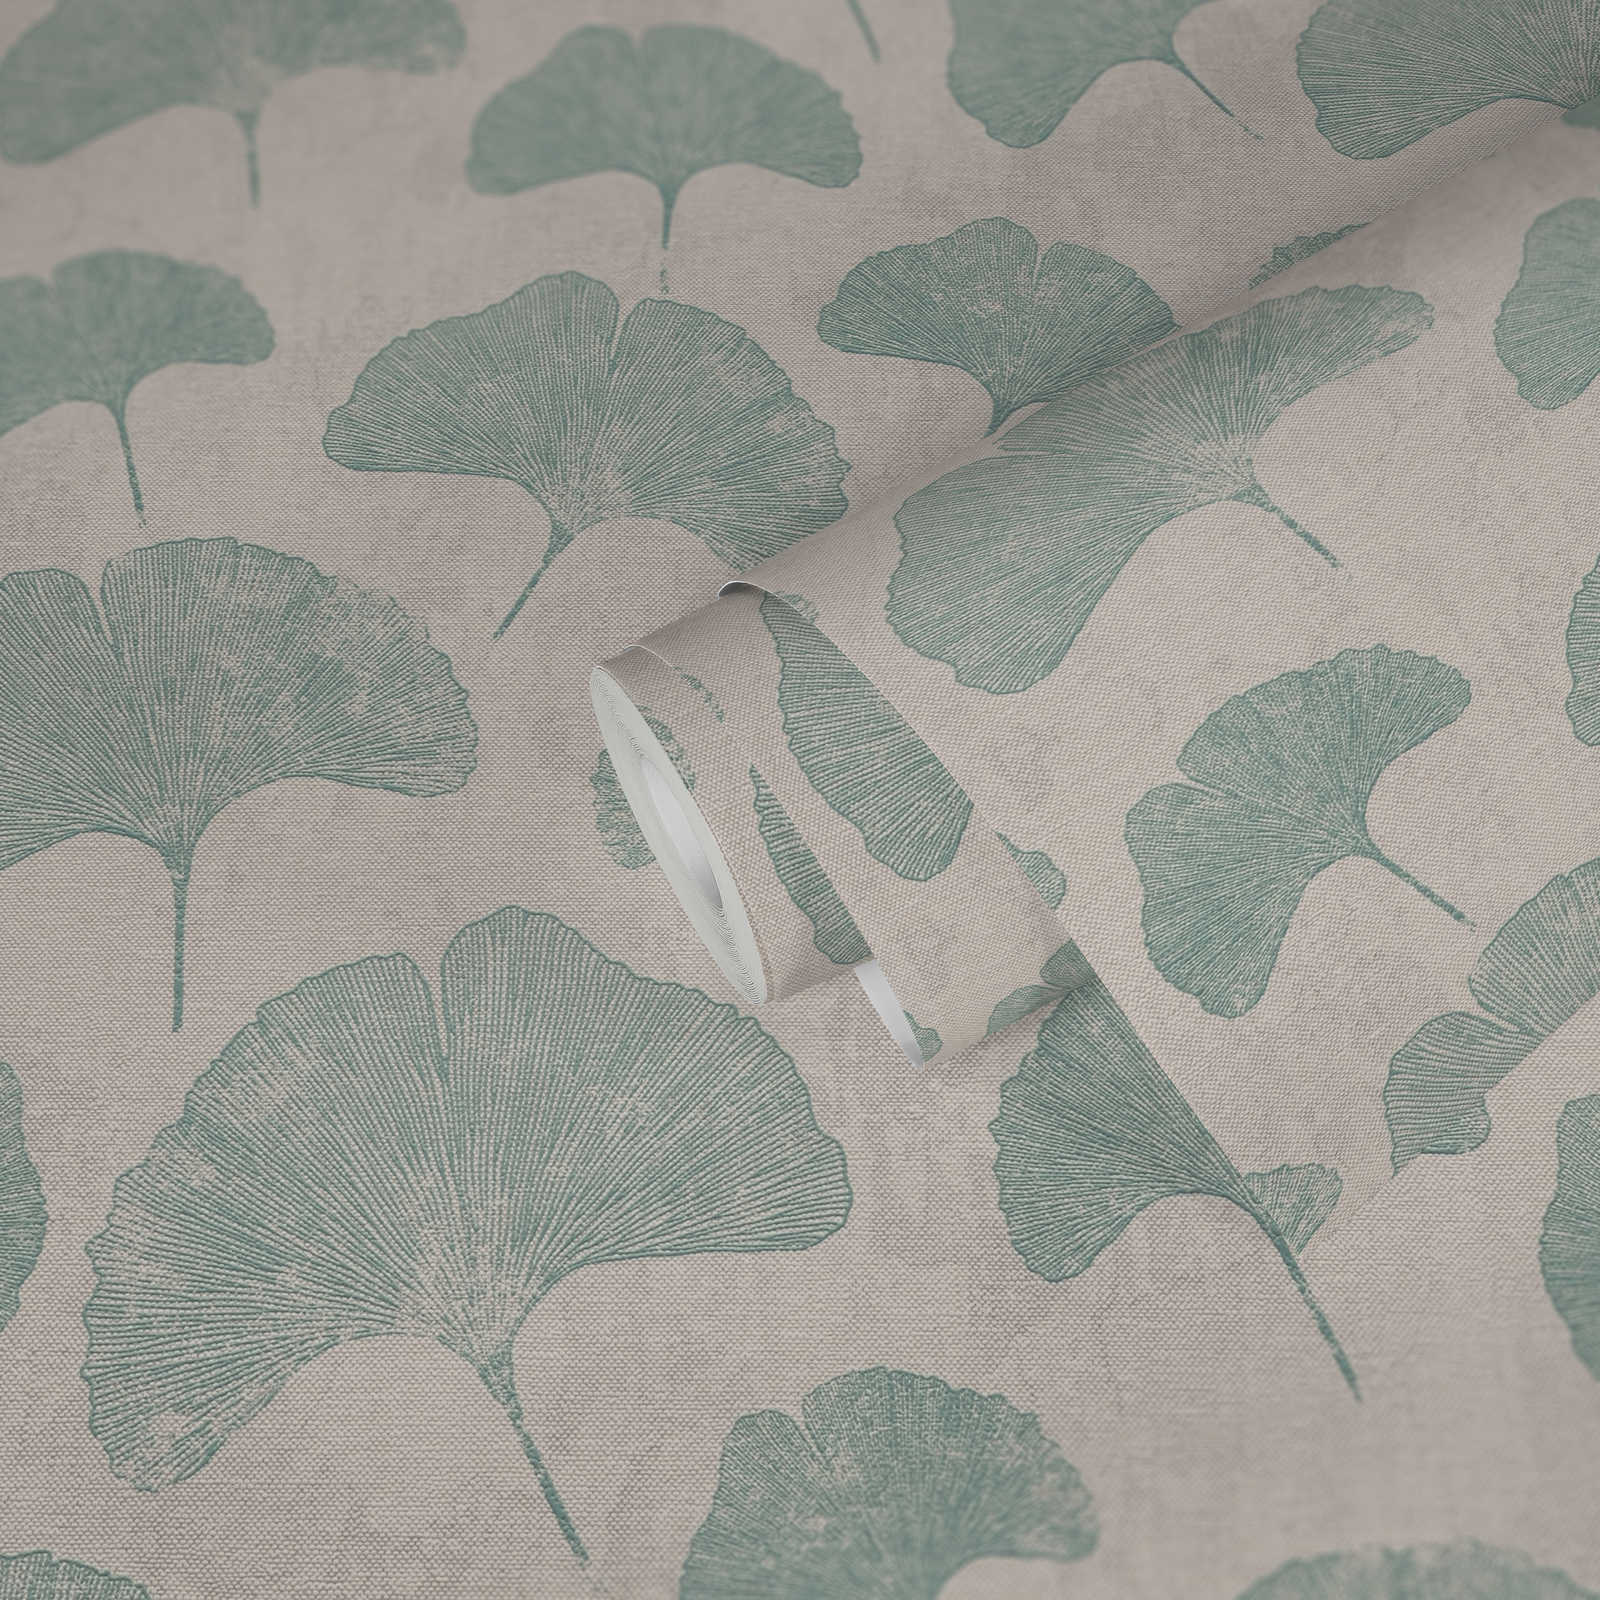             Leaves wallpaper floral matt textured - grey, white, mint
        